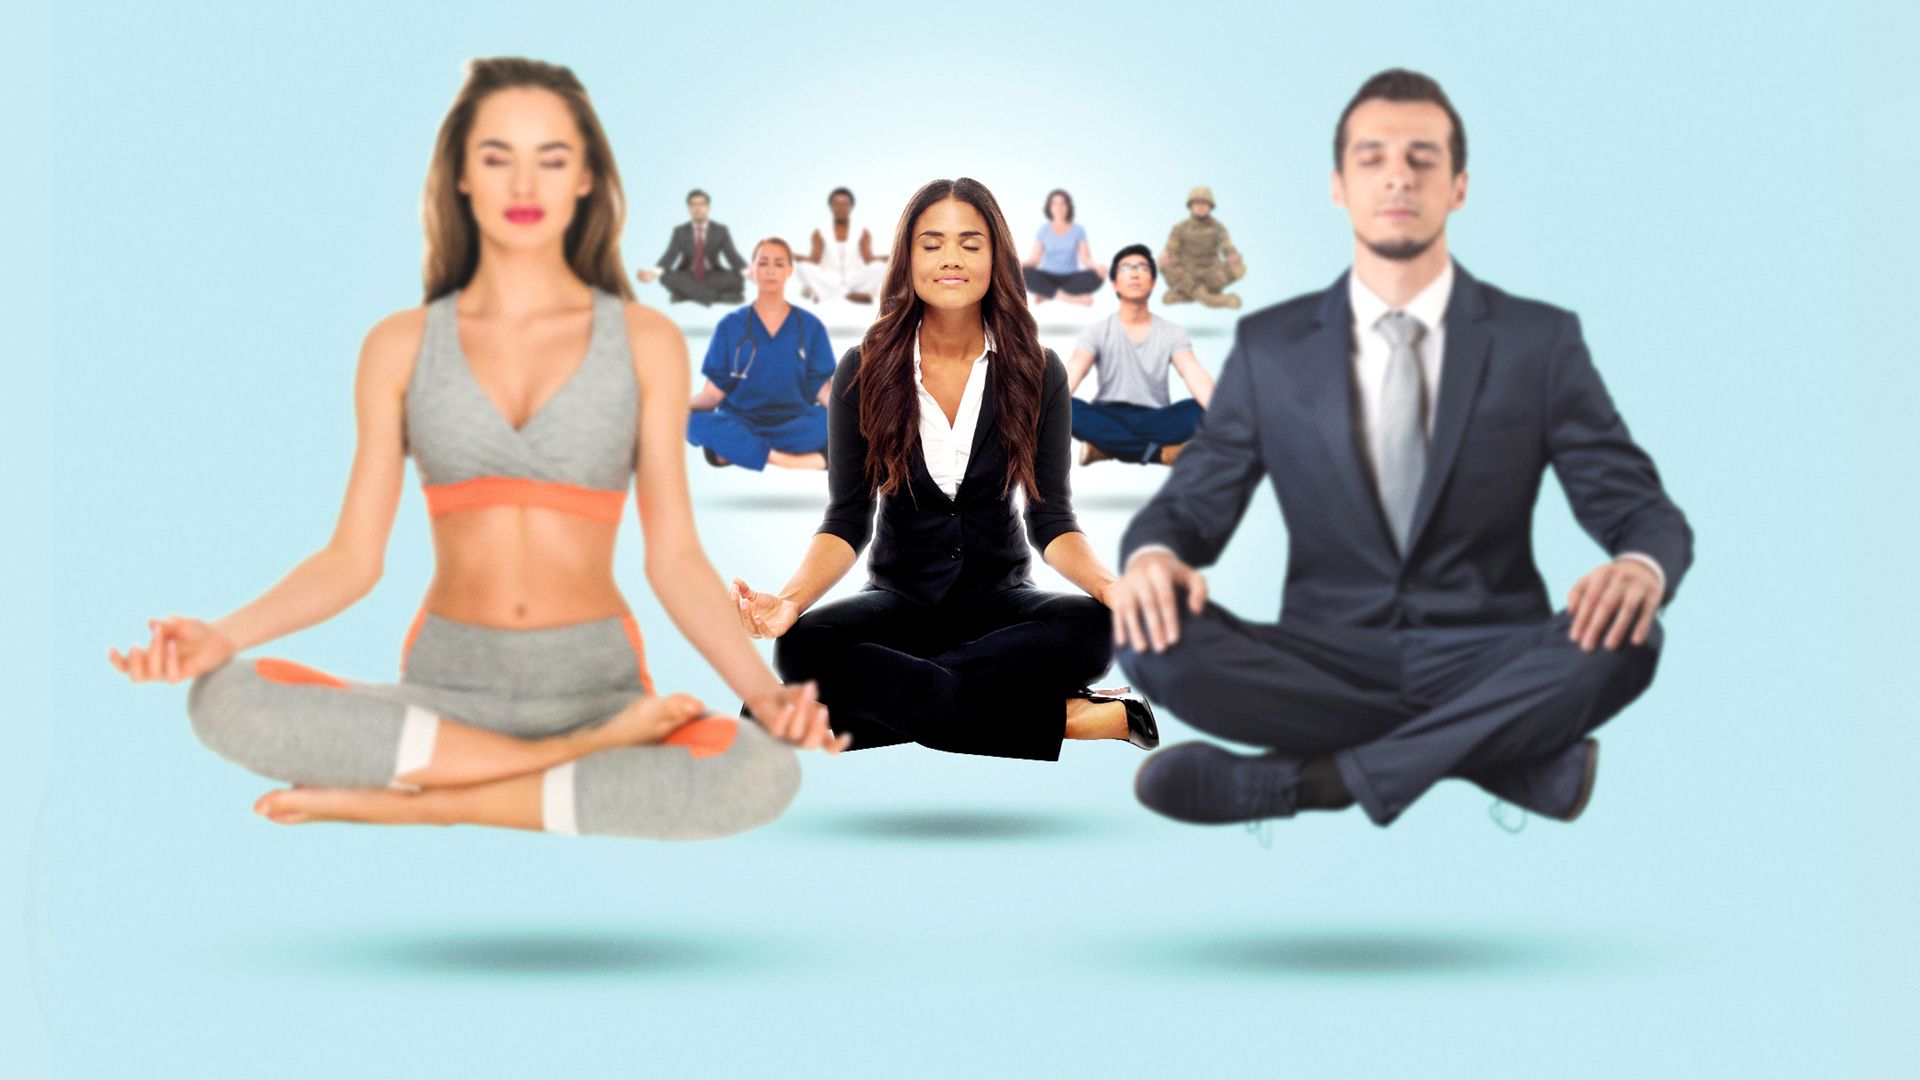 The Mindfulness Movement background